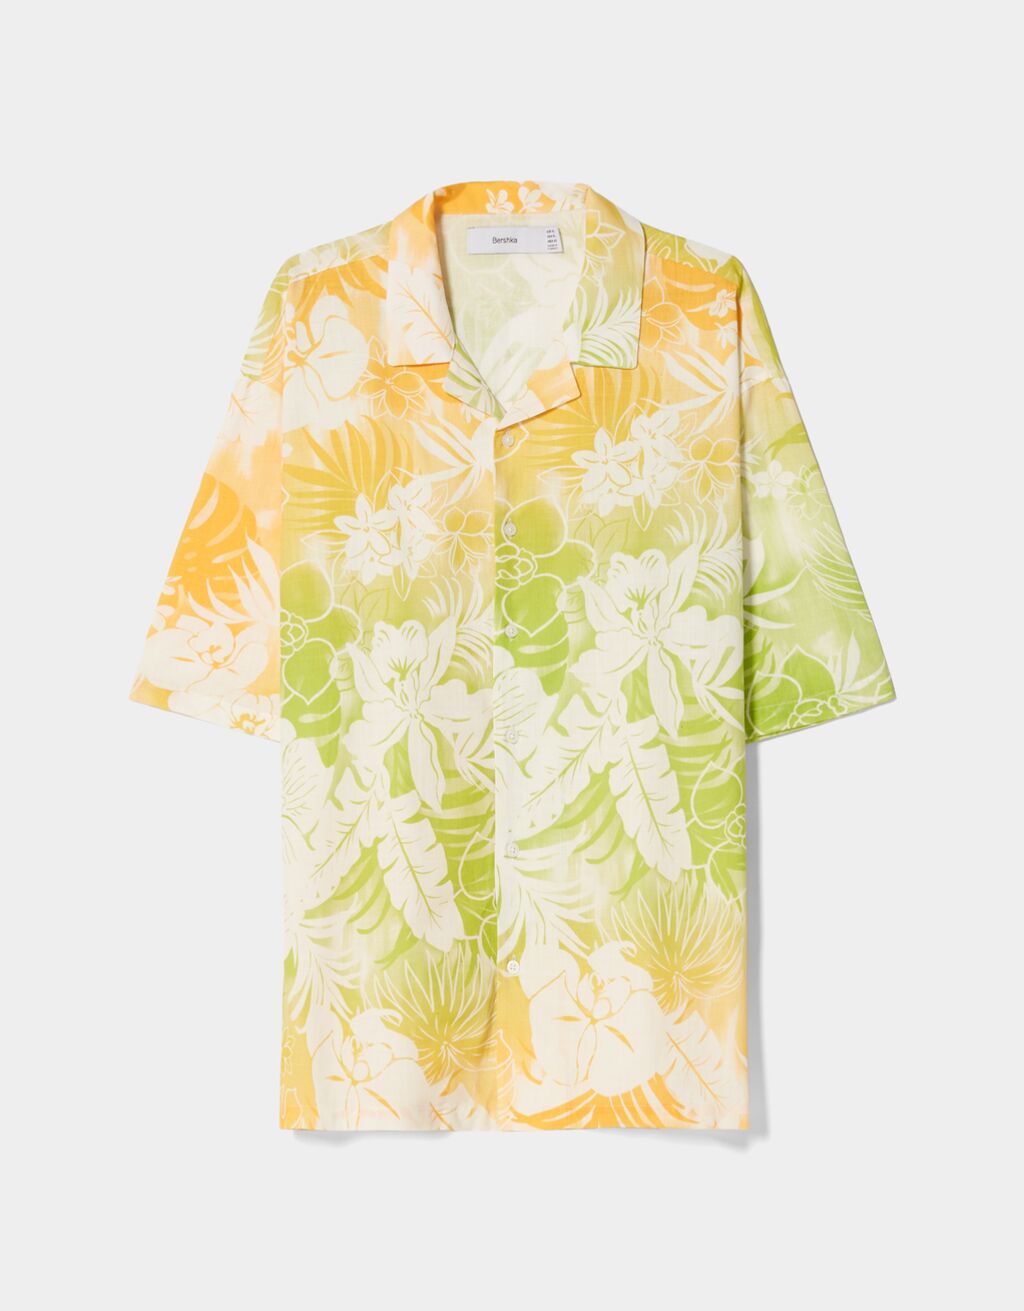 Camisa manga corta relaxed fit algodón textura floral